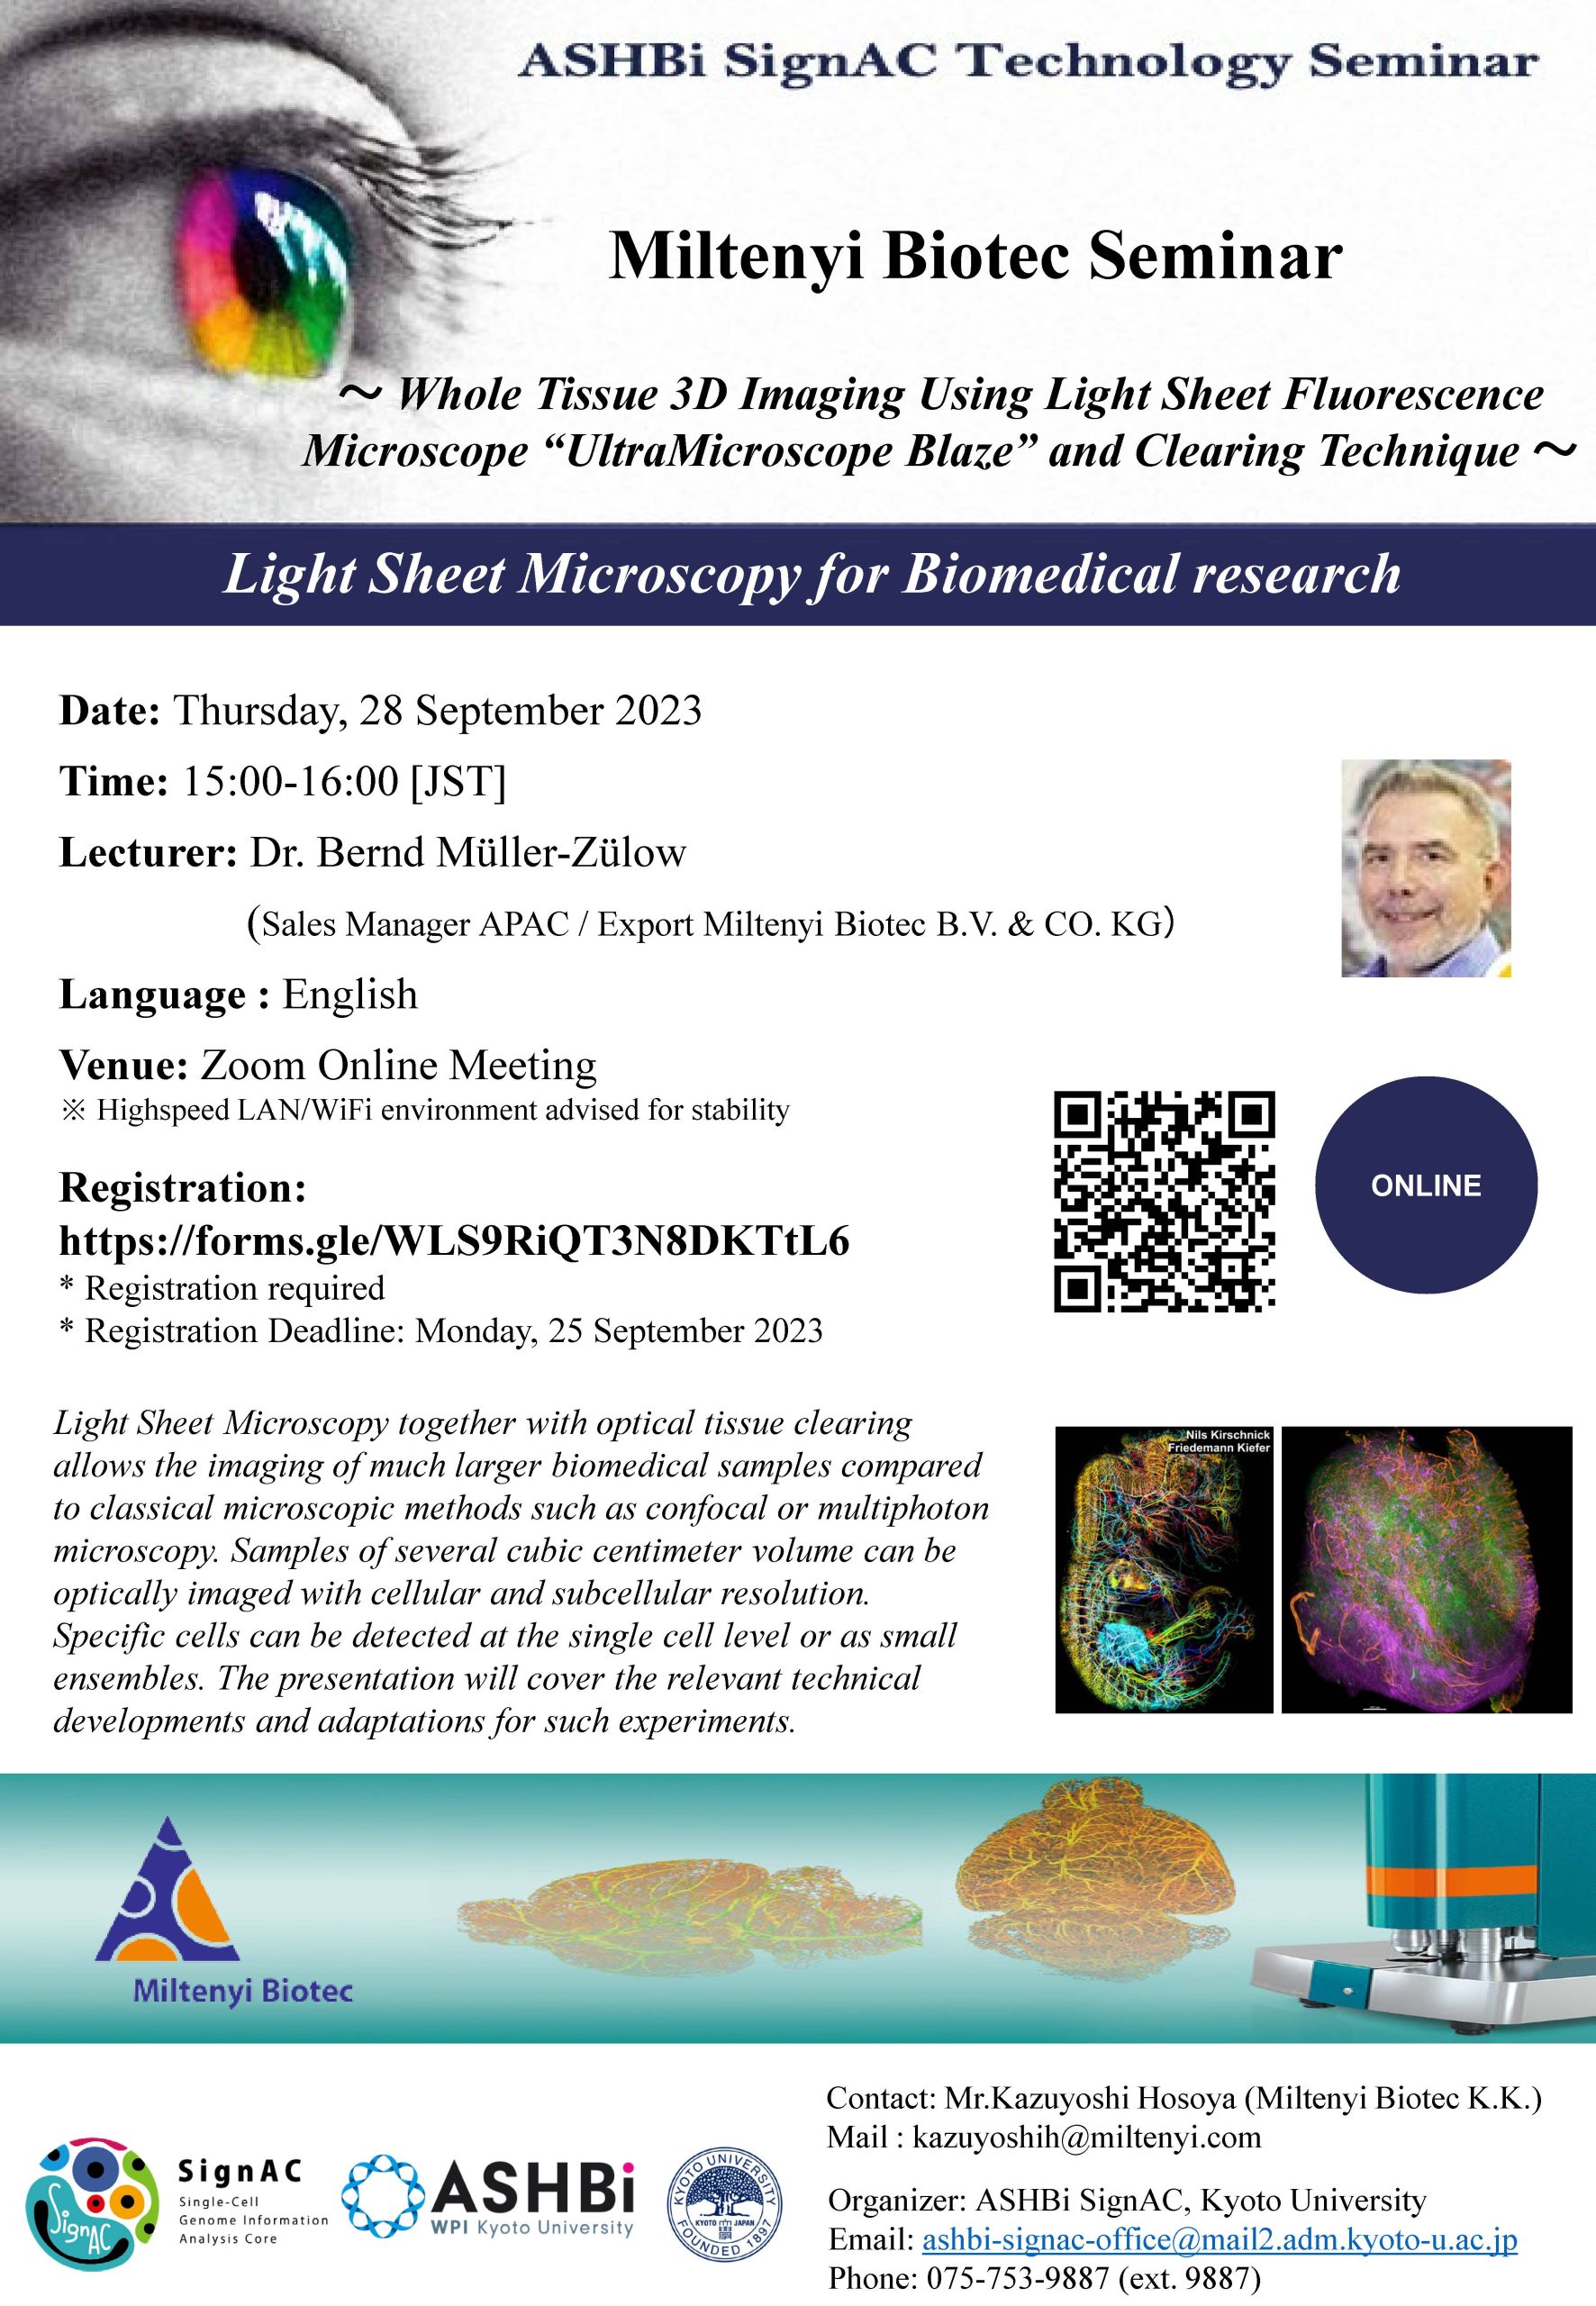 ASHBi SignAC Technology Seminar – Miltenyi Biotec Seminar